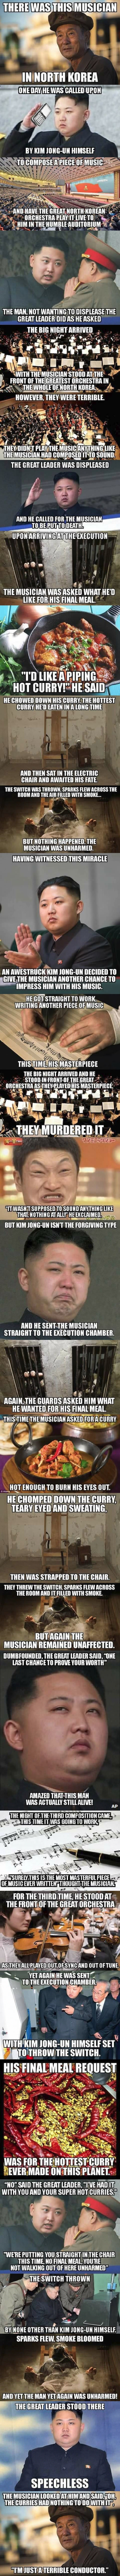 Kim Jong-Un versus Musician